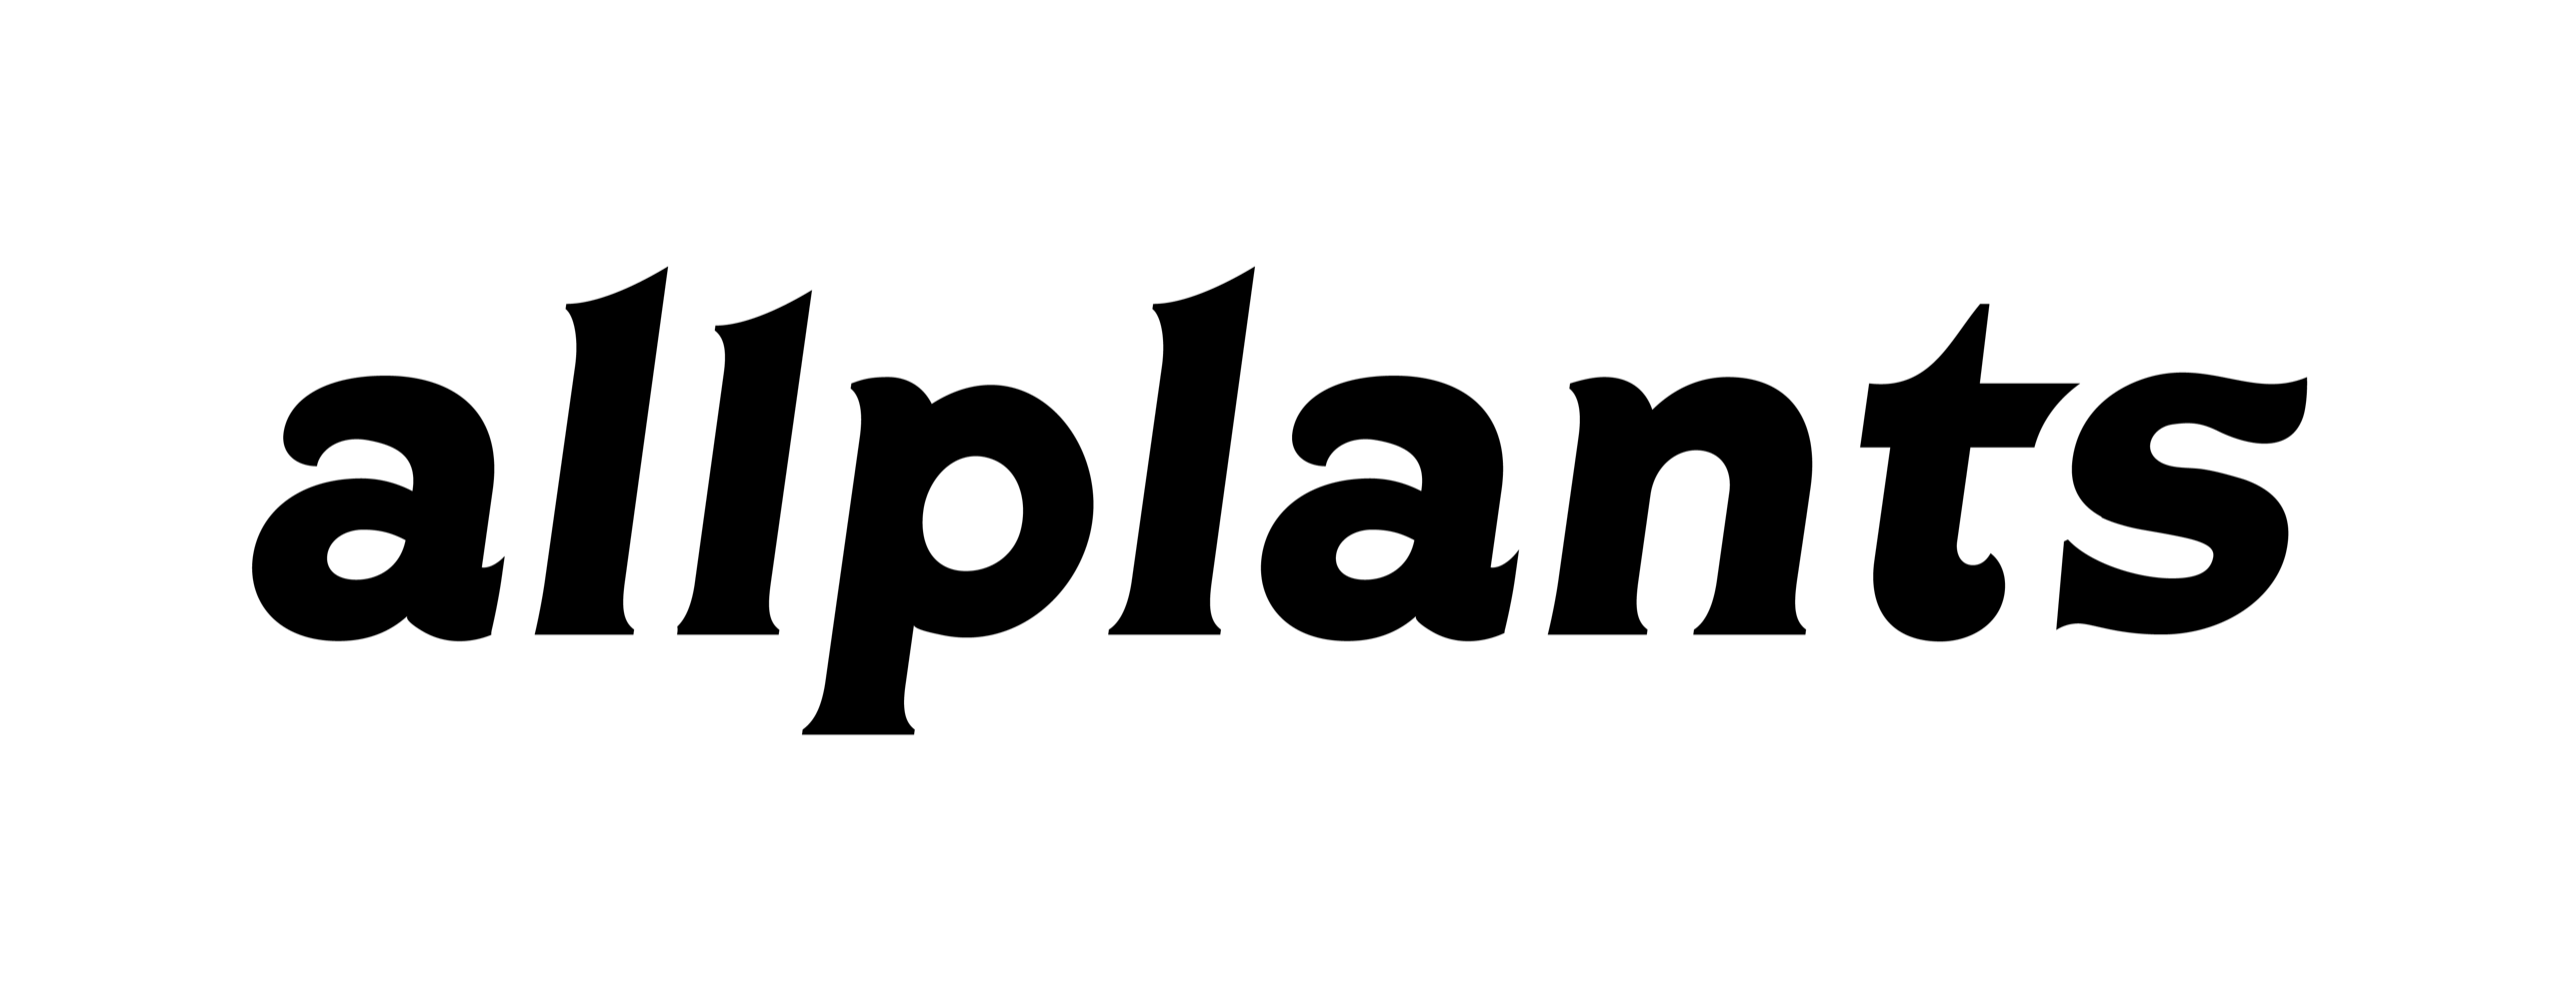 Allplants logo black